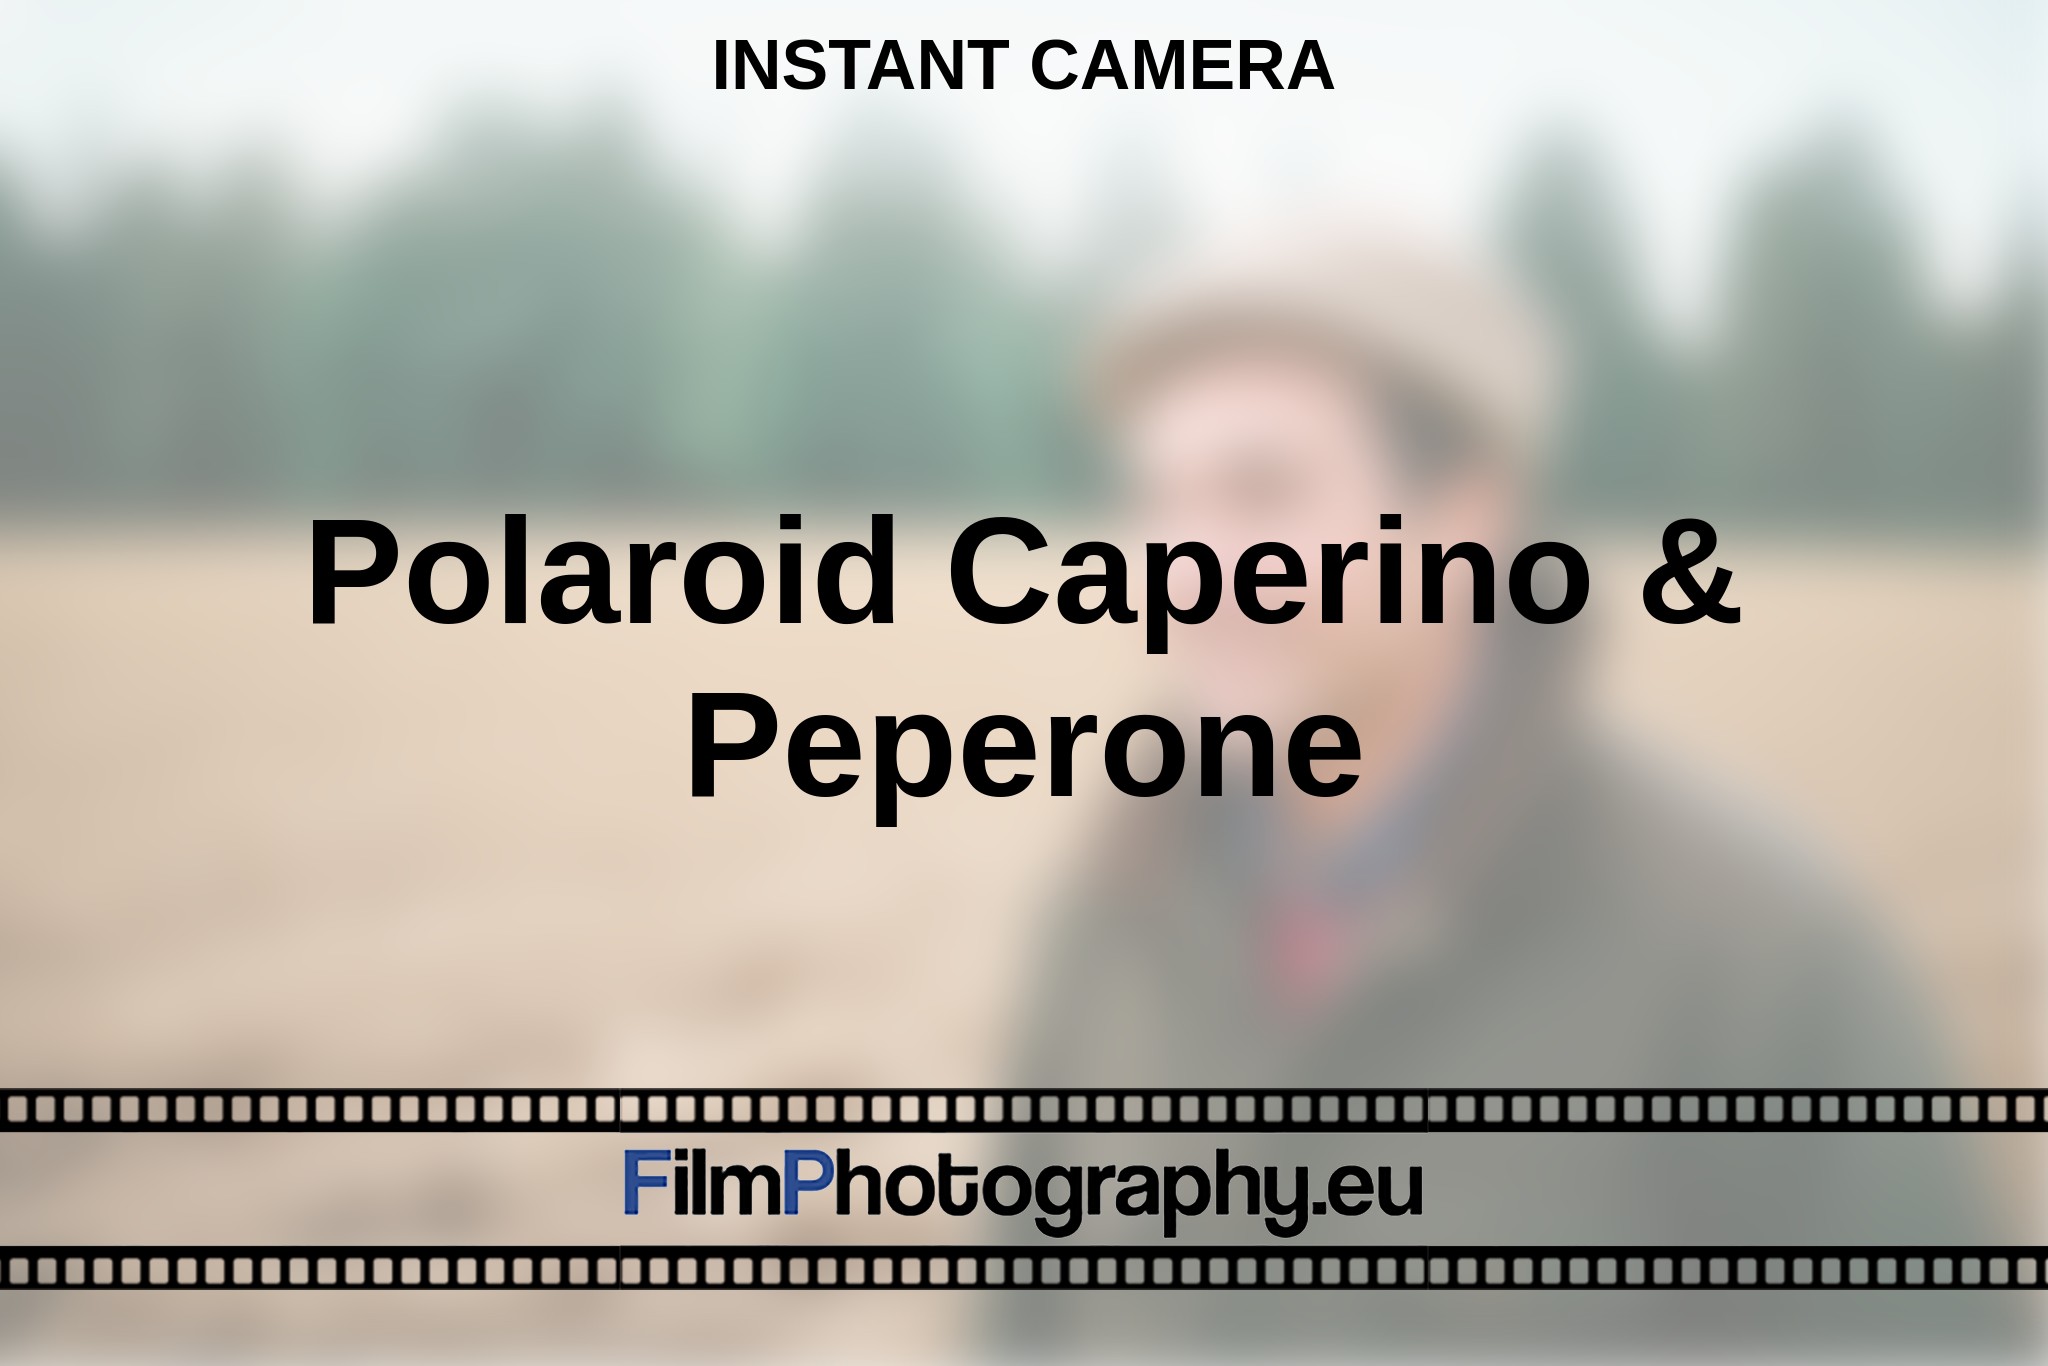 polaroid-caperino-peperone-instant-camera-bnv.jpg